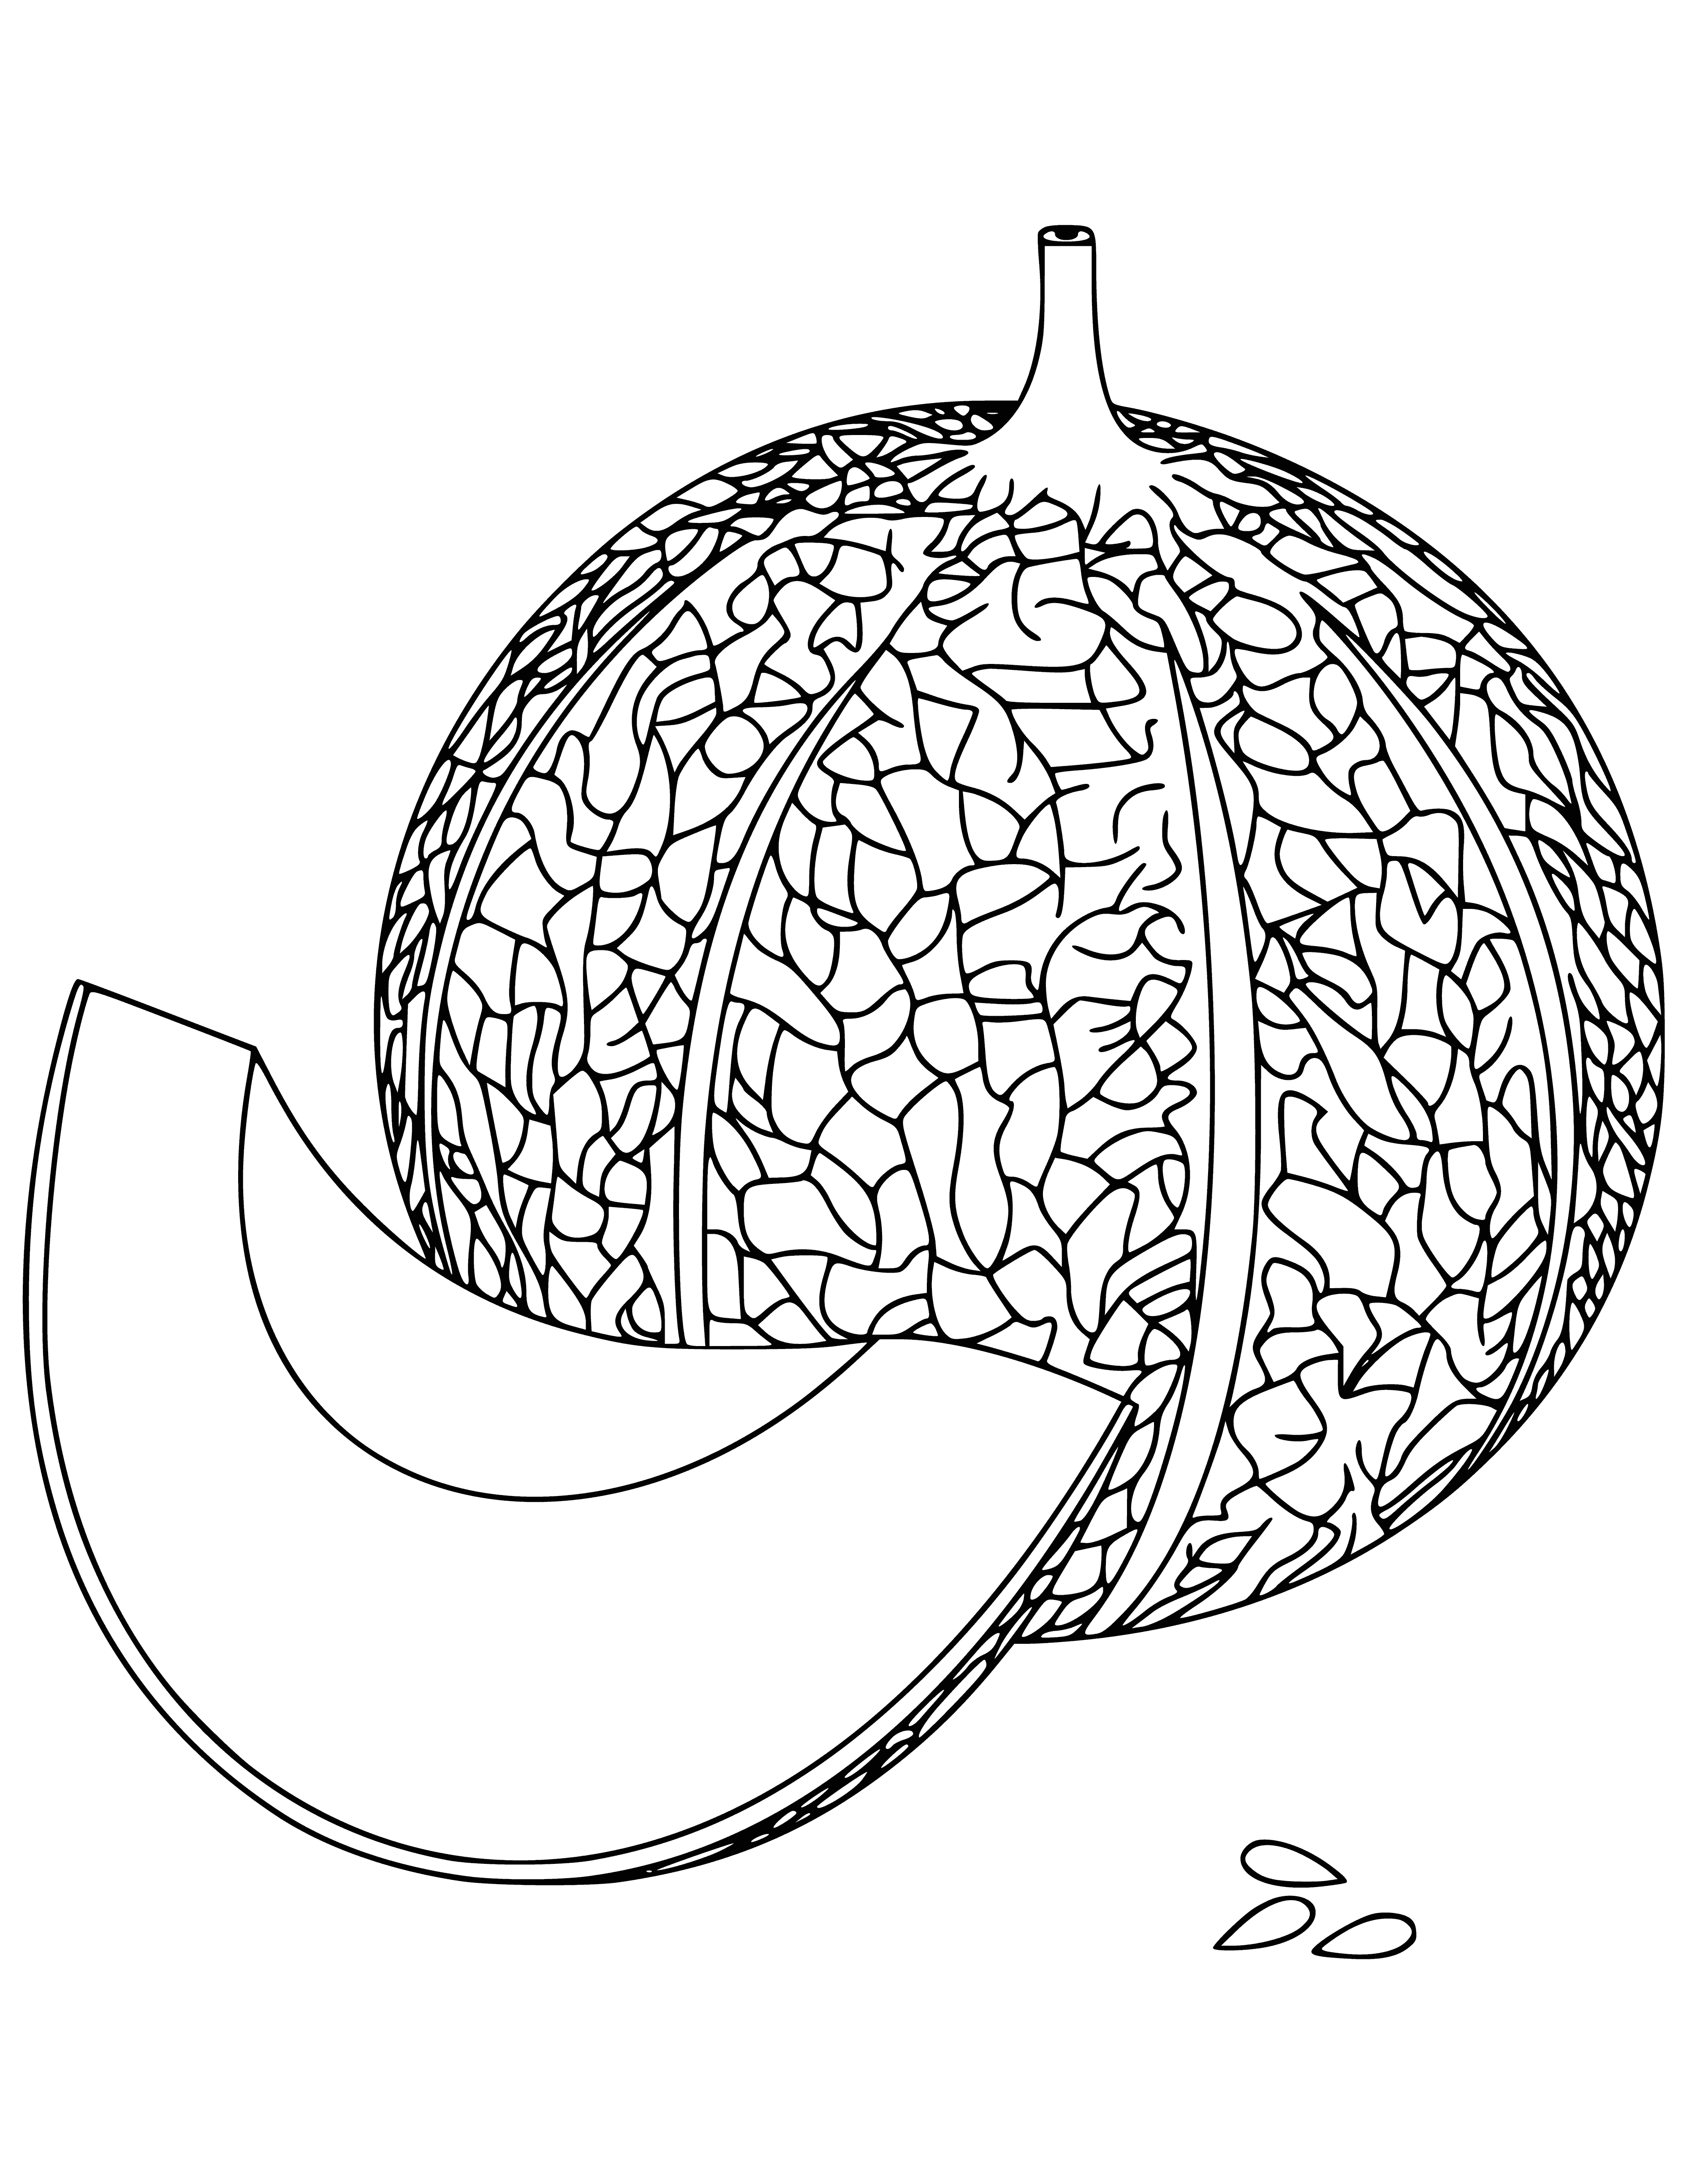 Melon coloring page